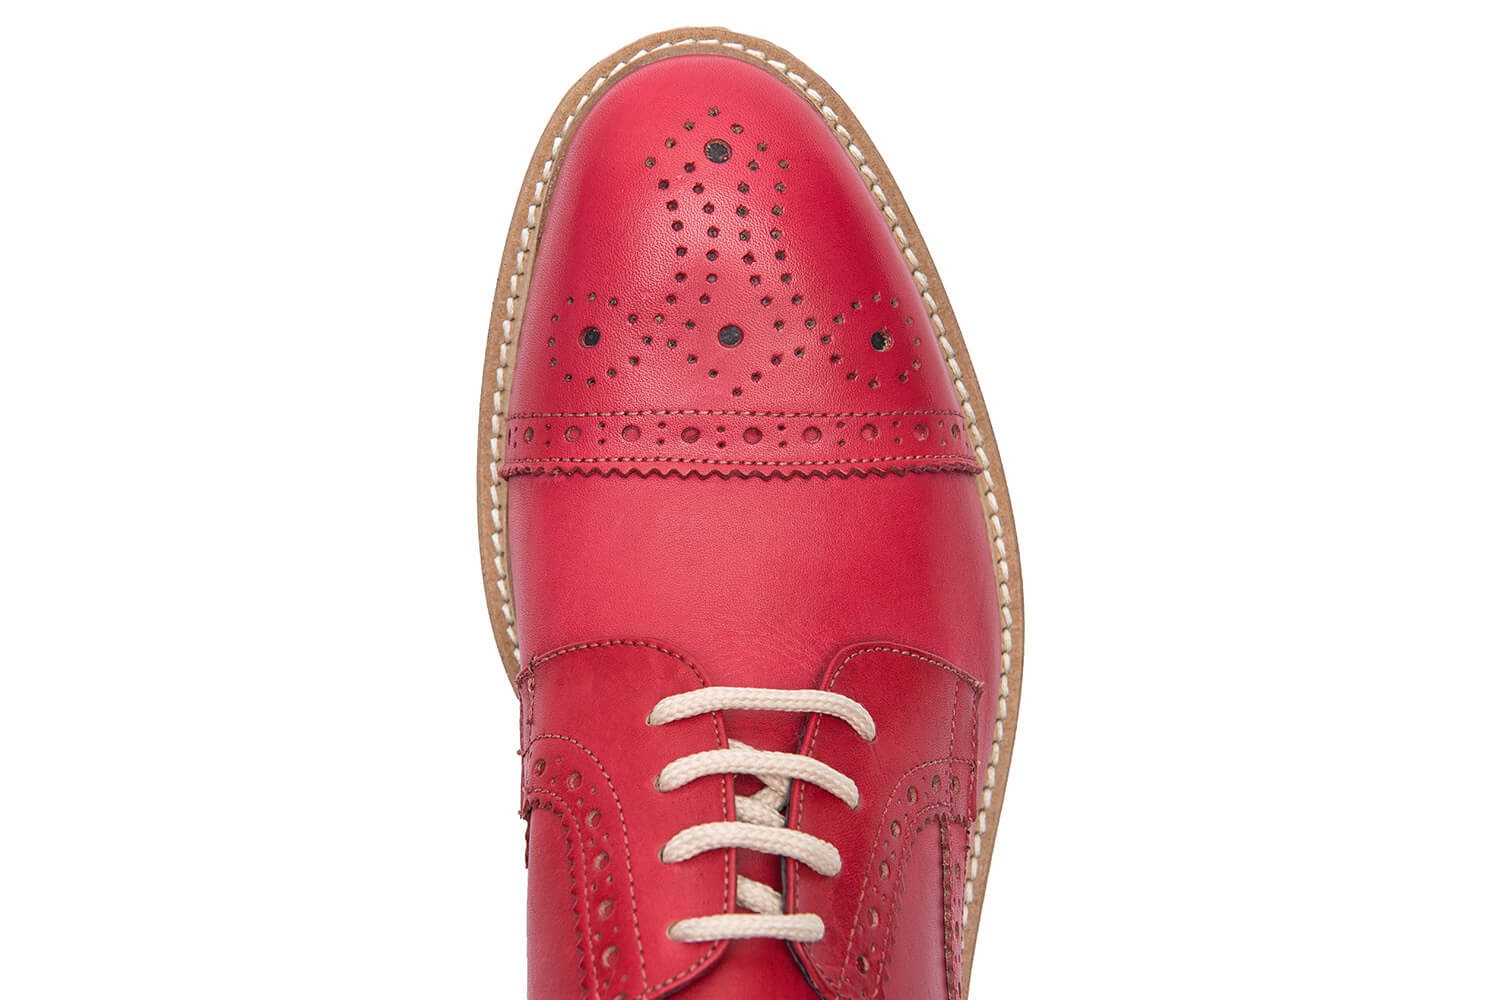 Pantofi rosii piele naturala 3